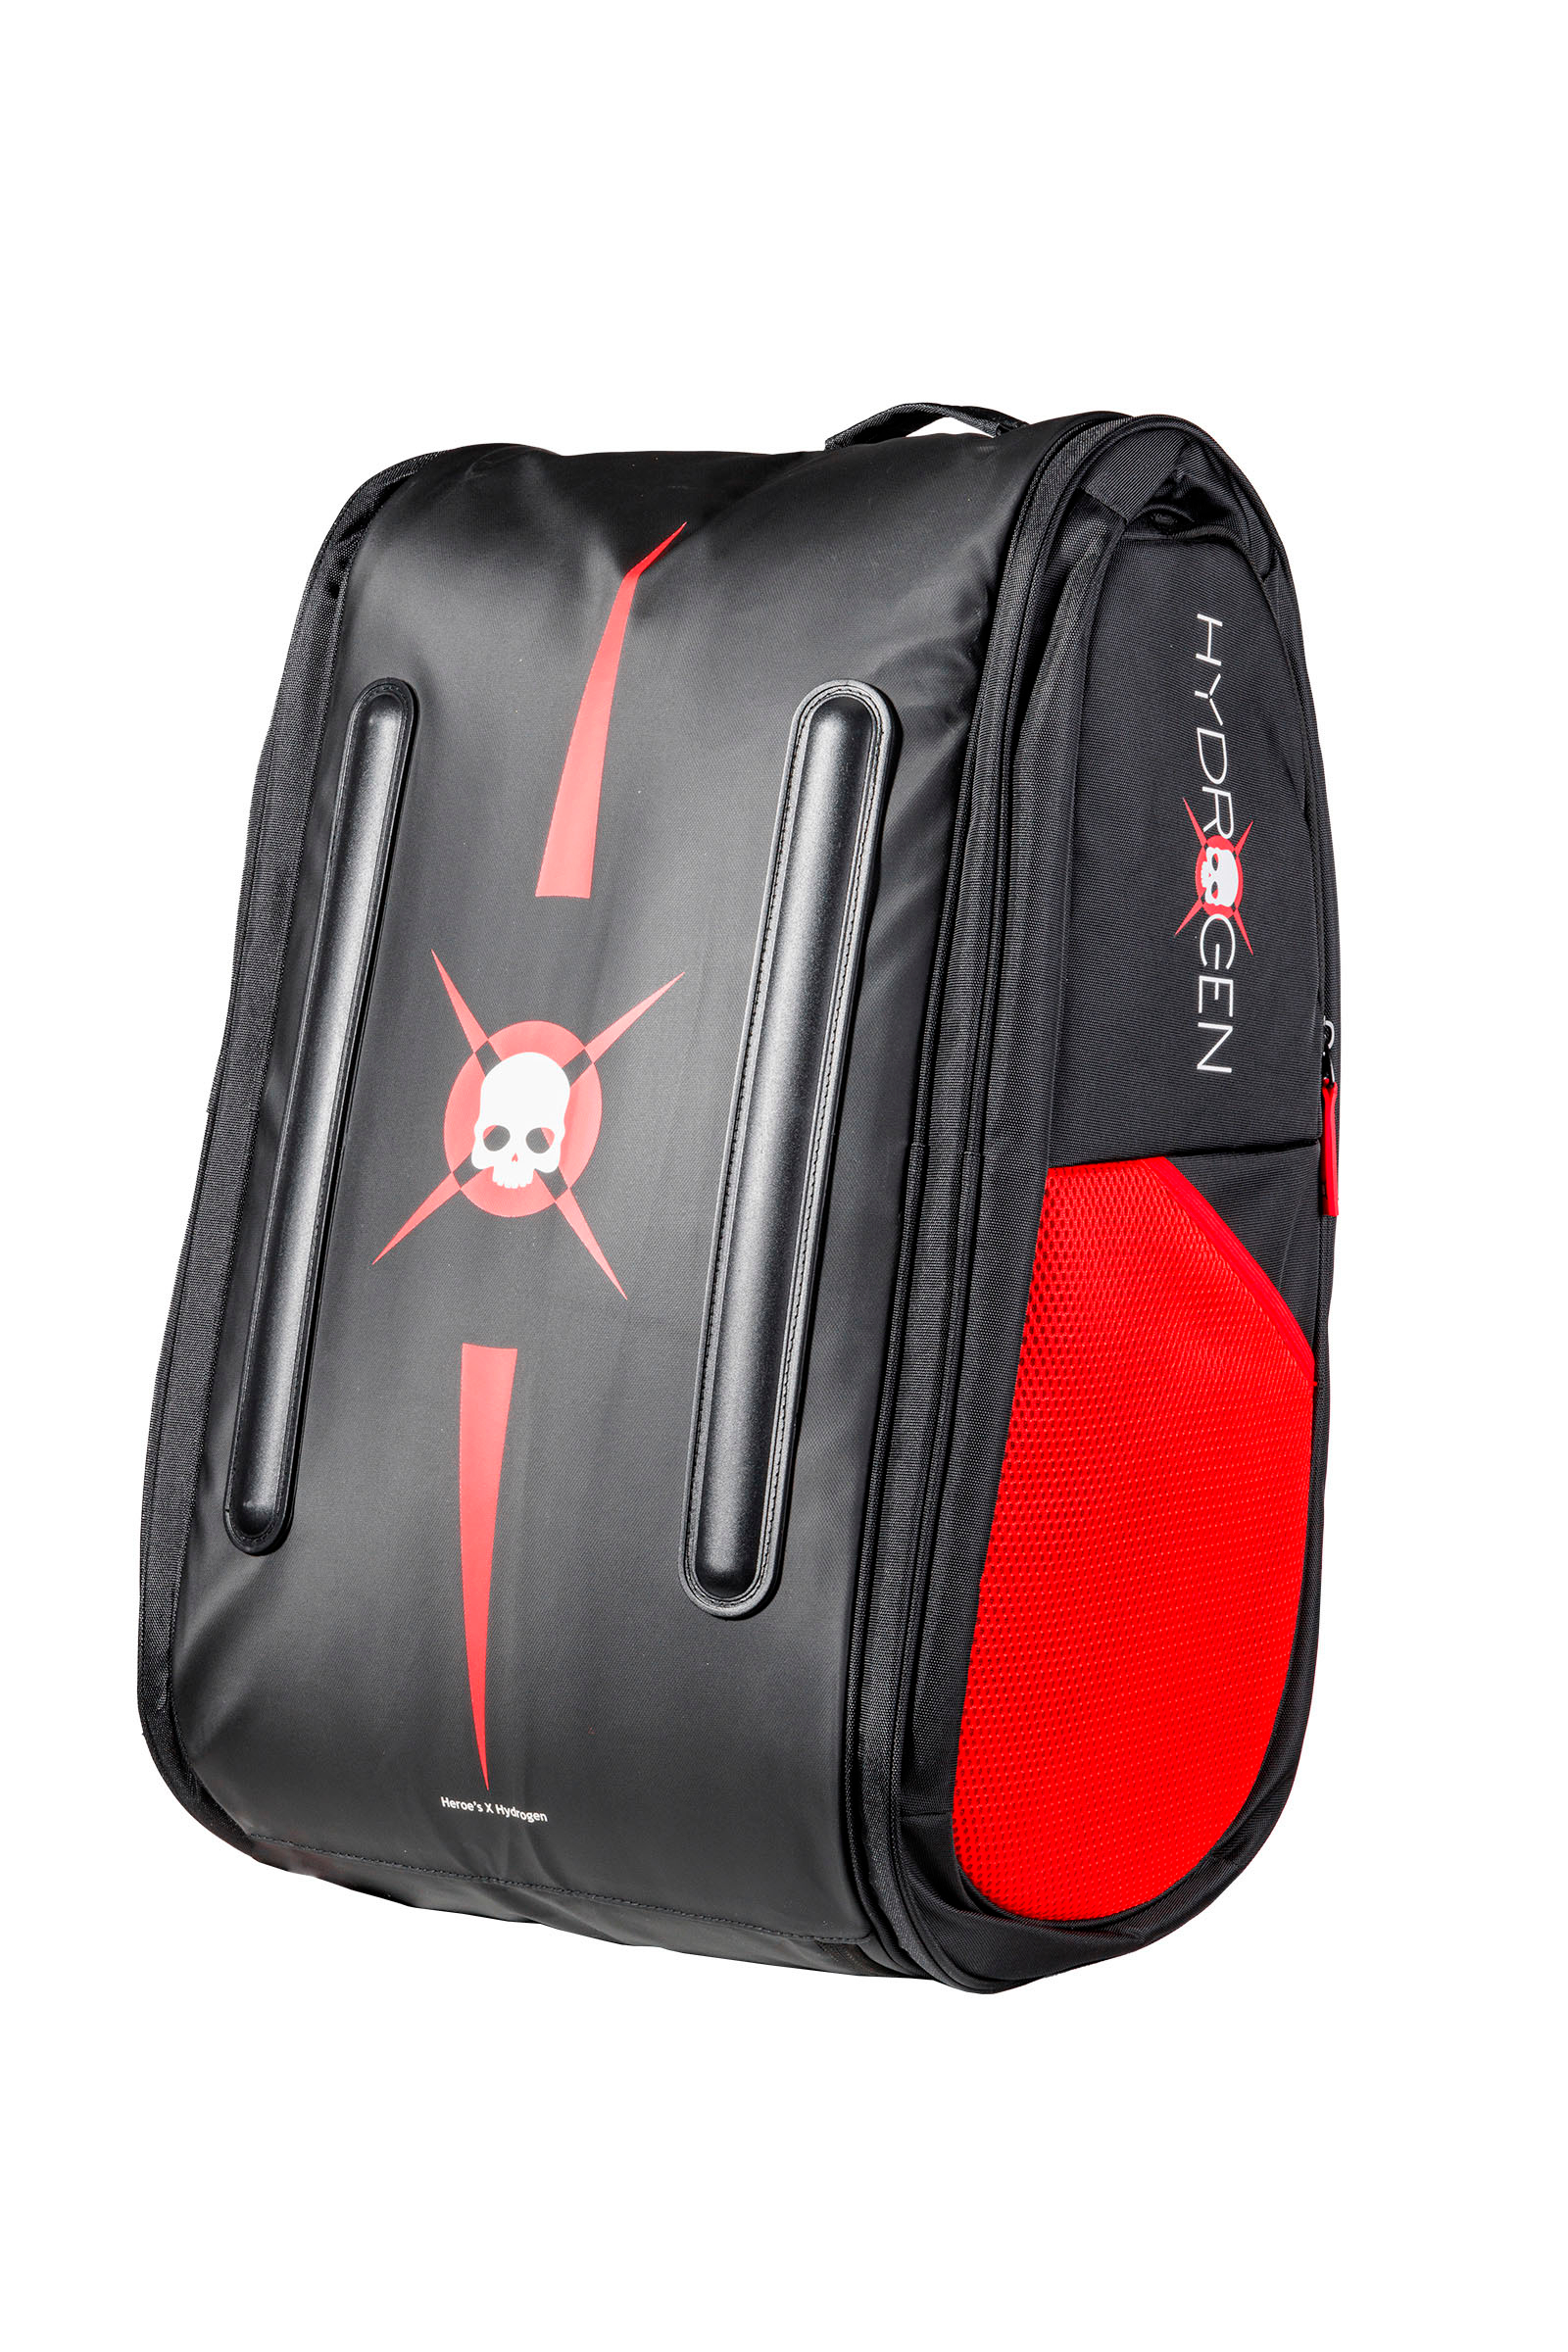 THUNDER HYDROGEN BAG - Accessories - Hydrogen - Luxury Sportwear